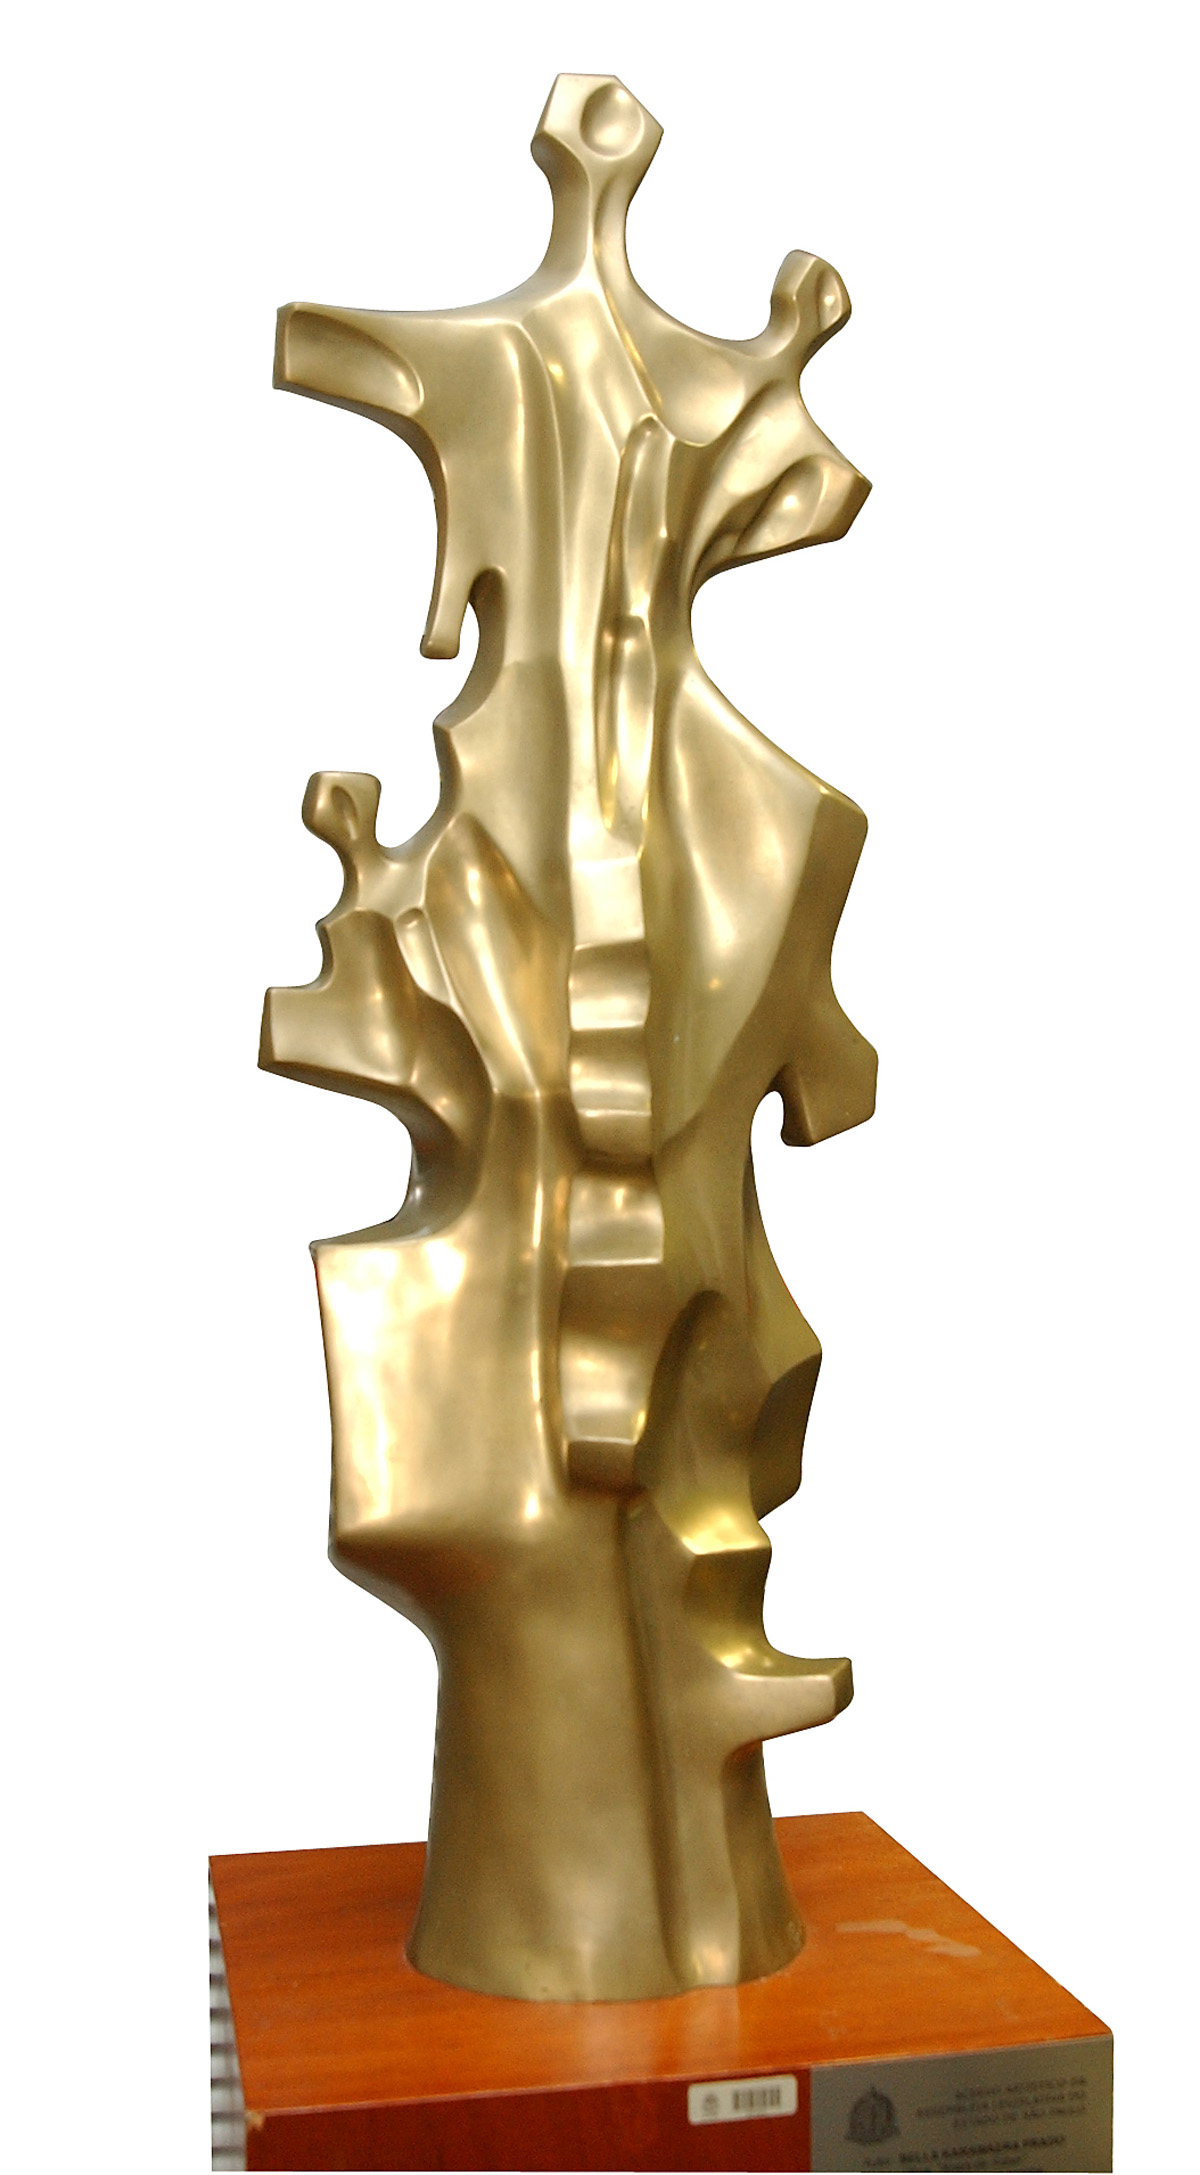 Escultura em bronze nsia de Saber (1977)<a style='float:right;color:#ccc' href='https://www3.al.sp.gov.br/repositorio/noticia/09-2008/Bellaobra1.jpg' target=_blank><i class='bi bi-zoom-in'></i> Clique para ver a imagem </a>